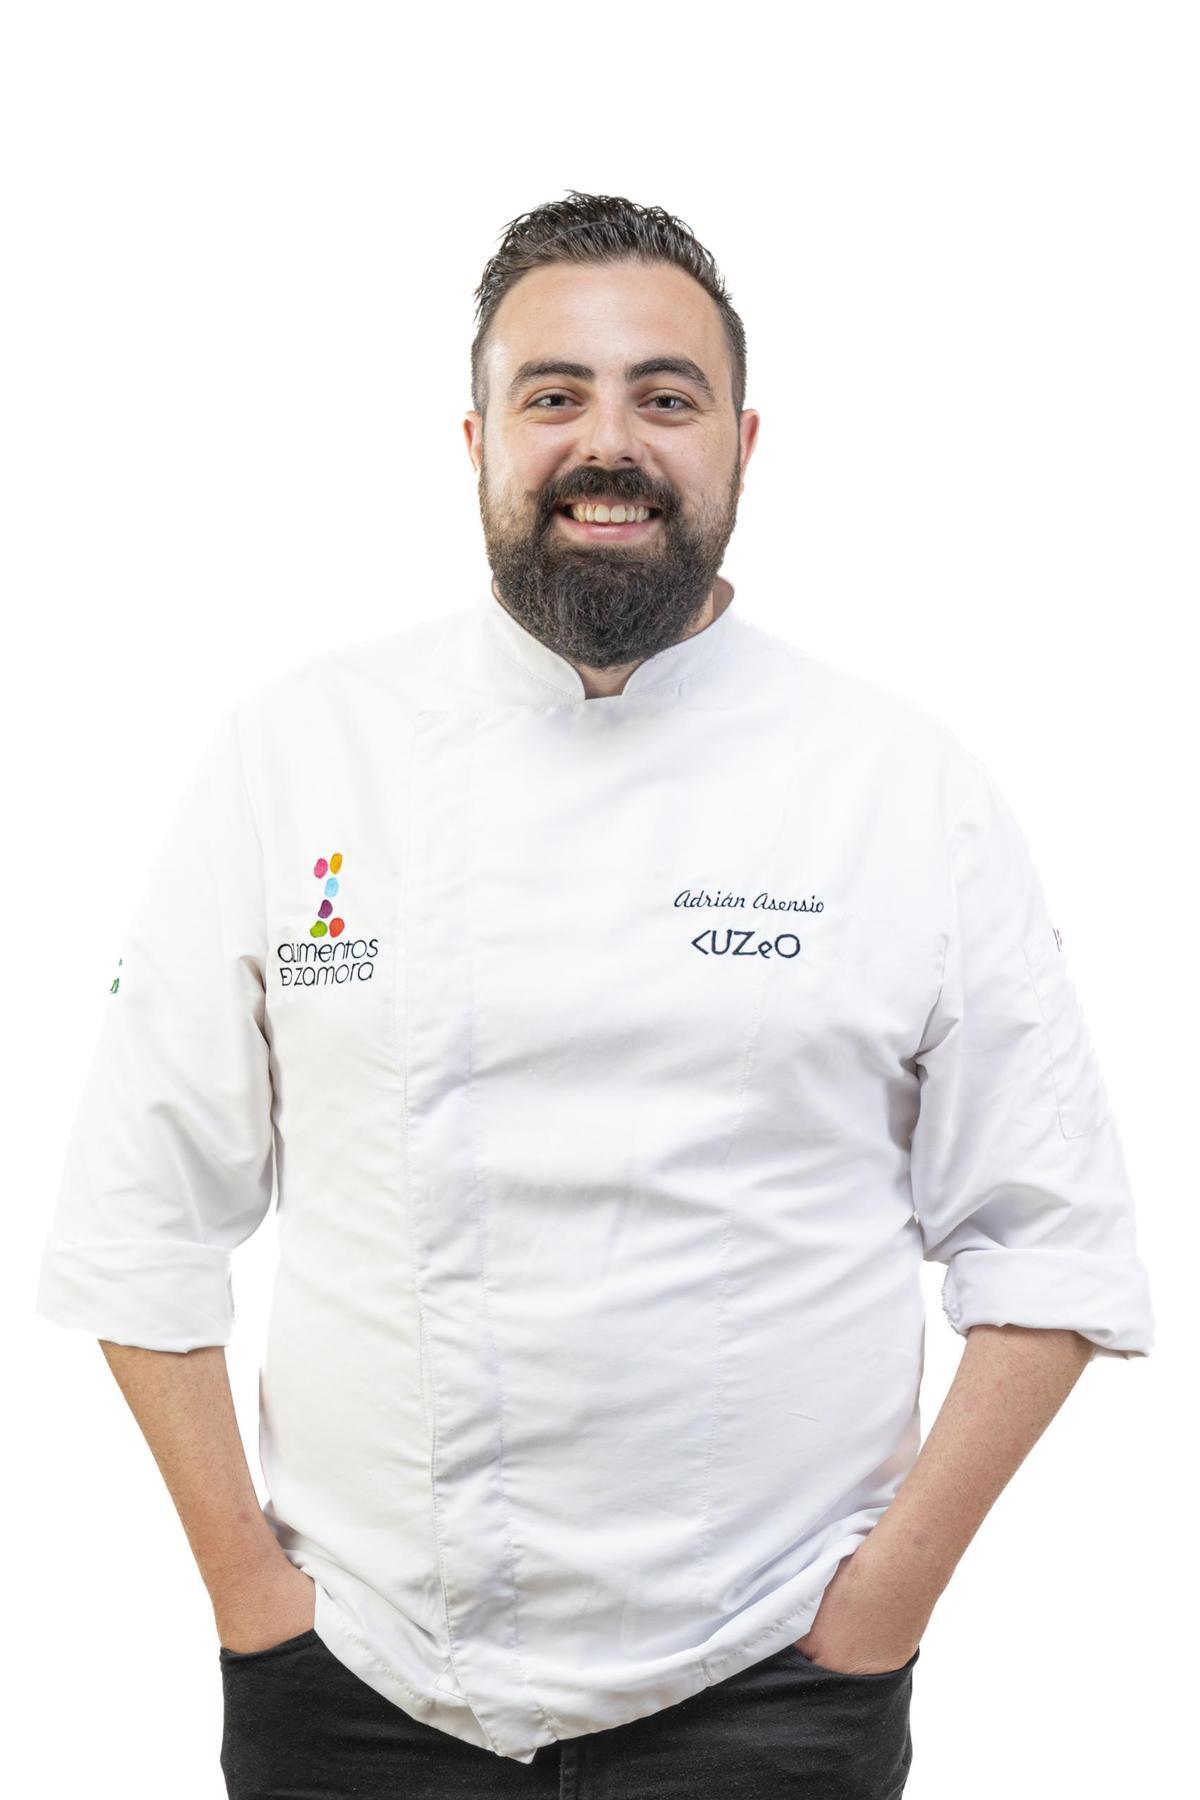 Adrián Asensio, chef del restaurante Cuzeo.